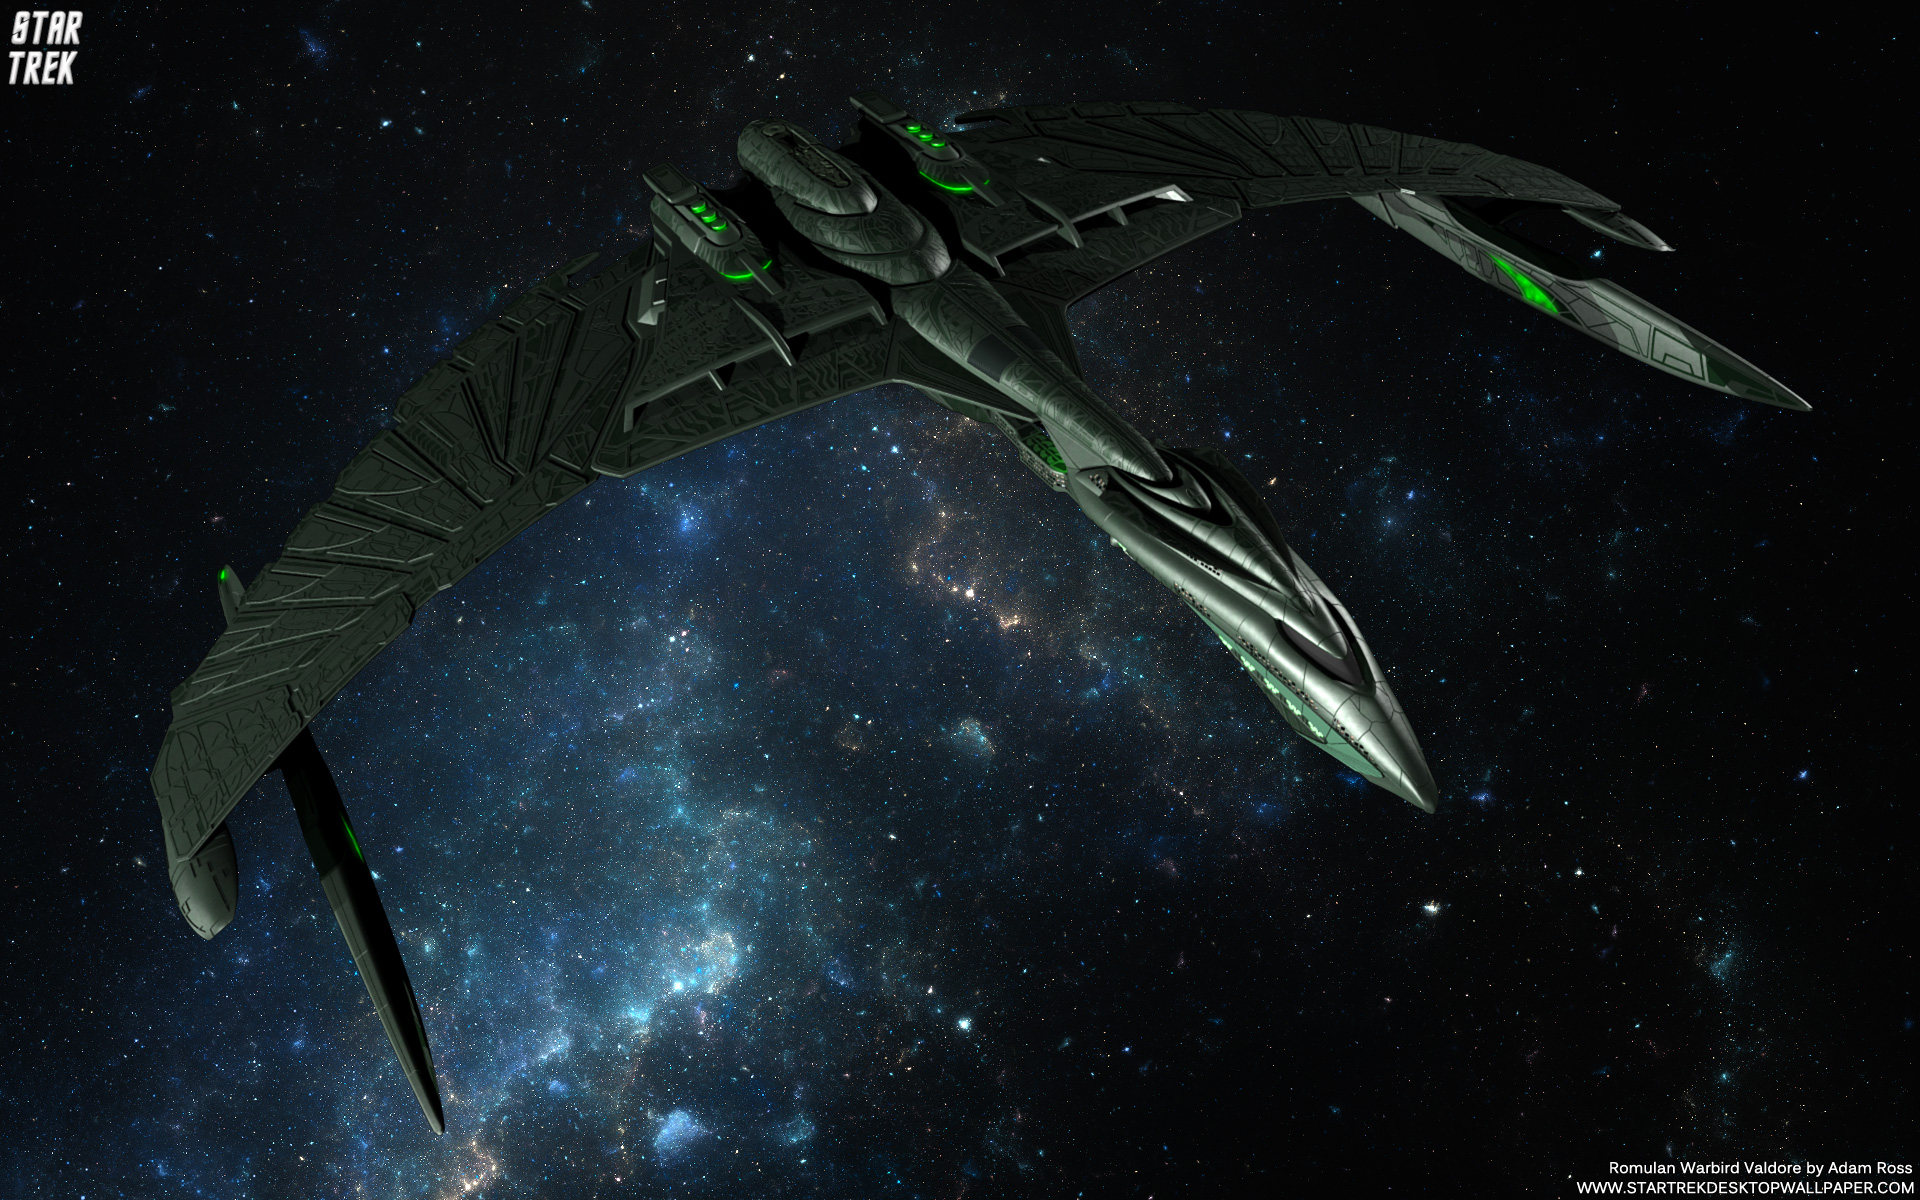 Star Trek Romulan Warbird Valdore free Star Trek computer